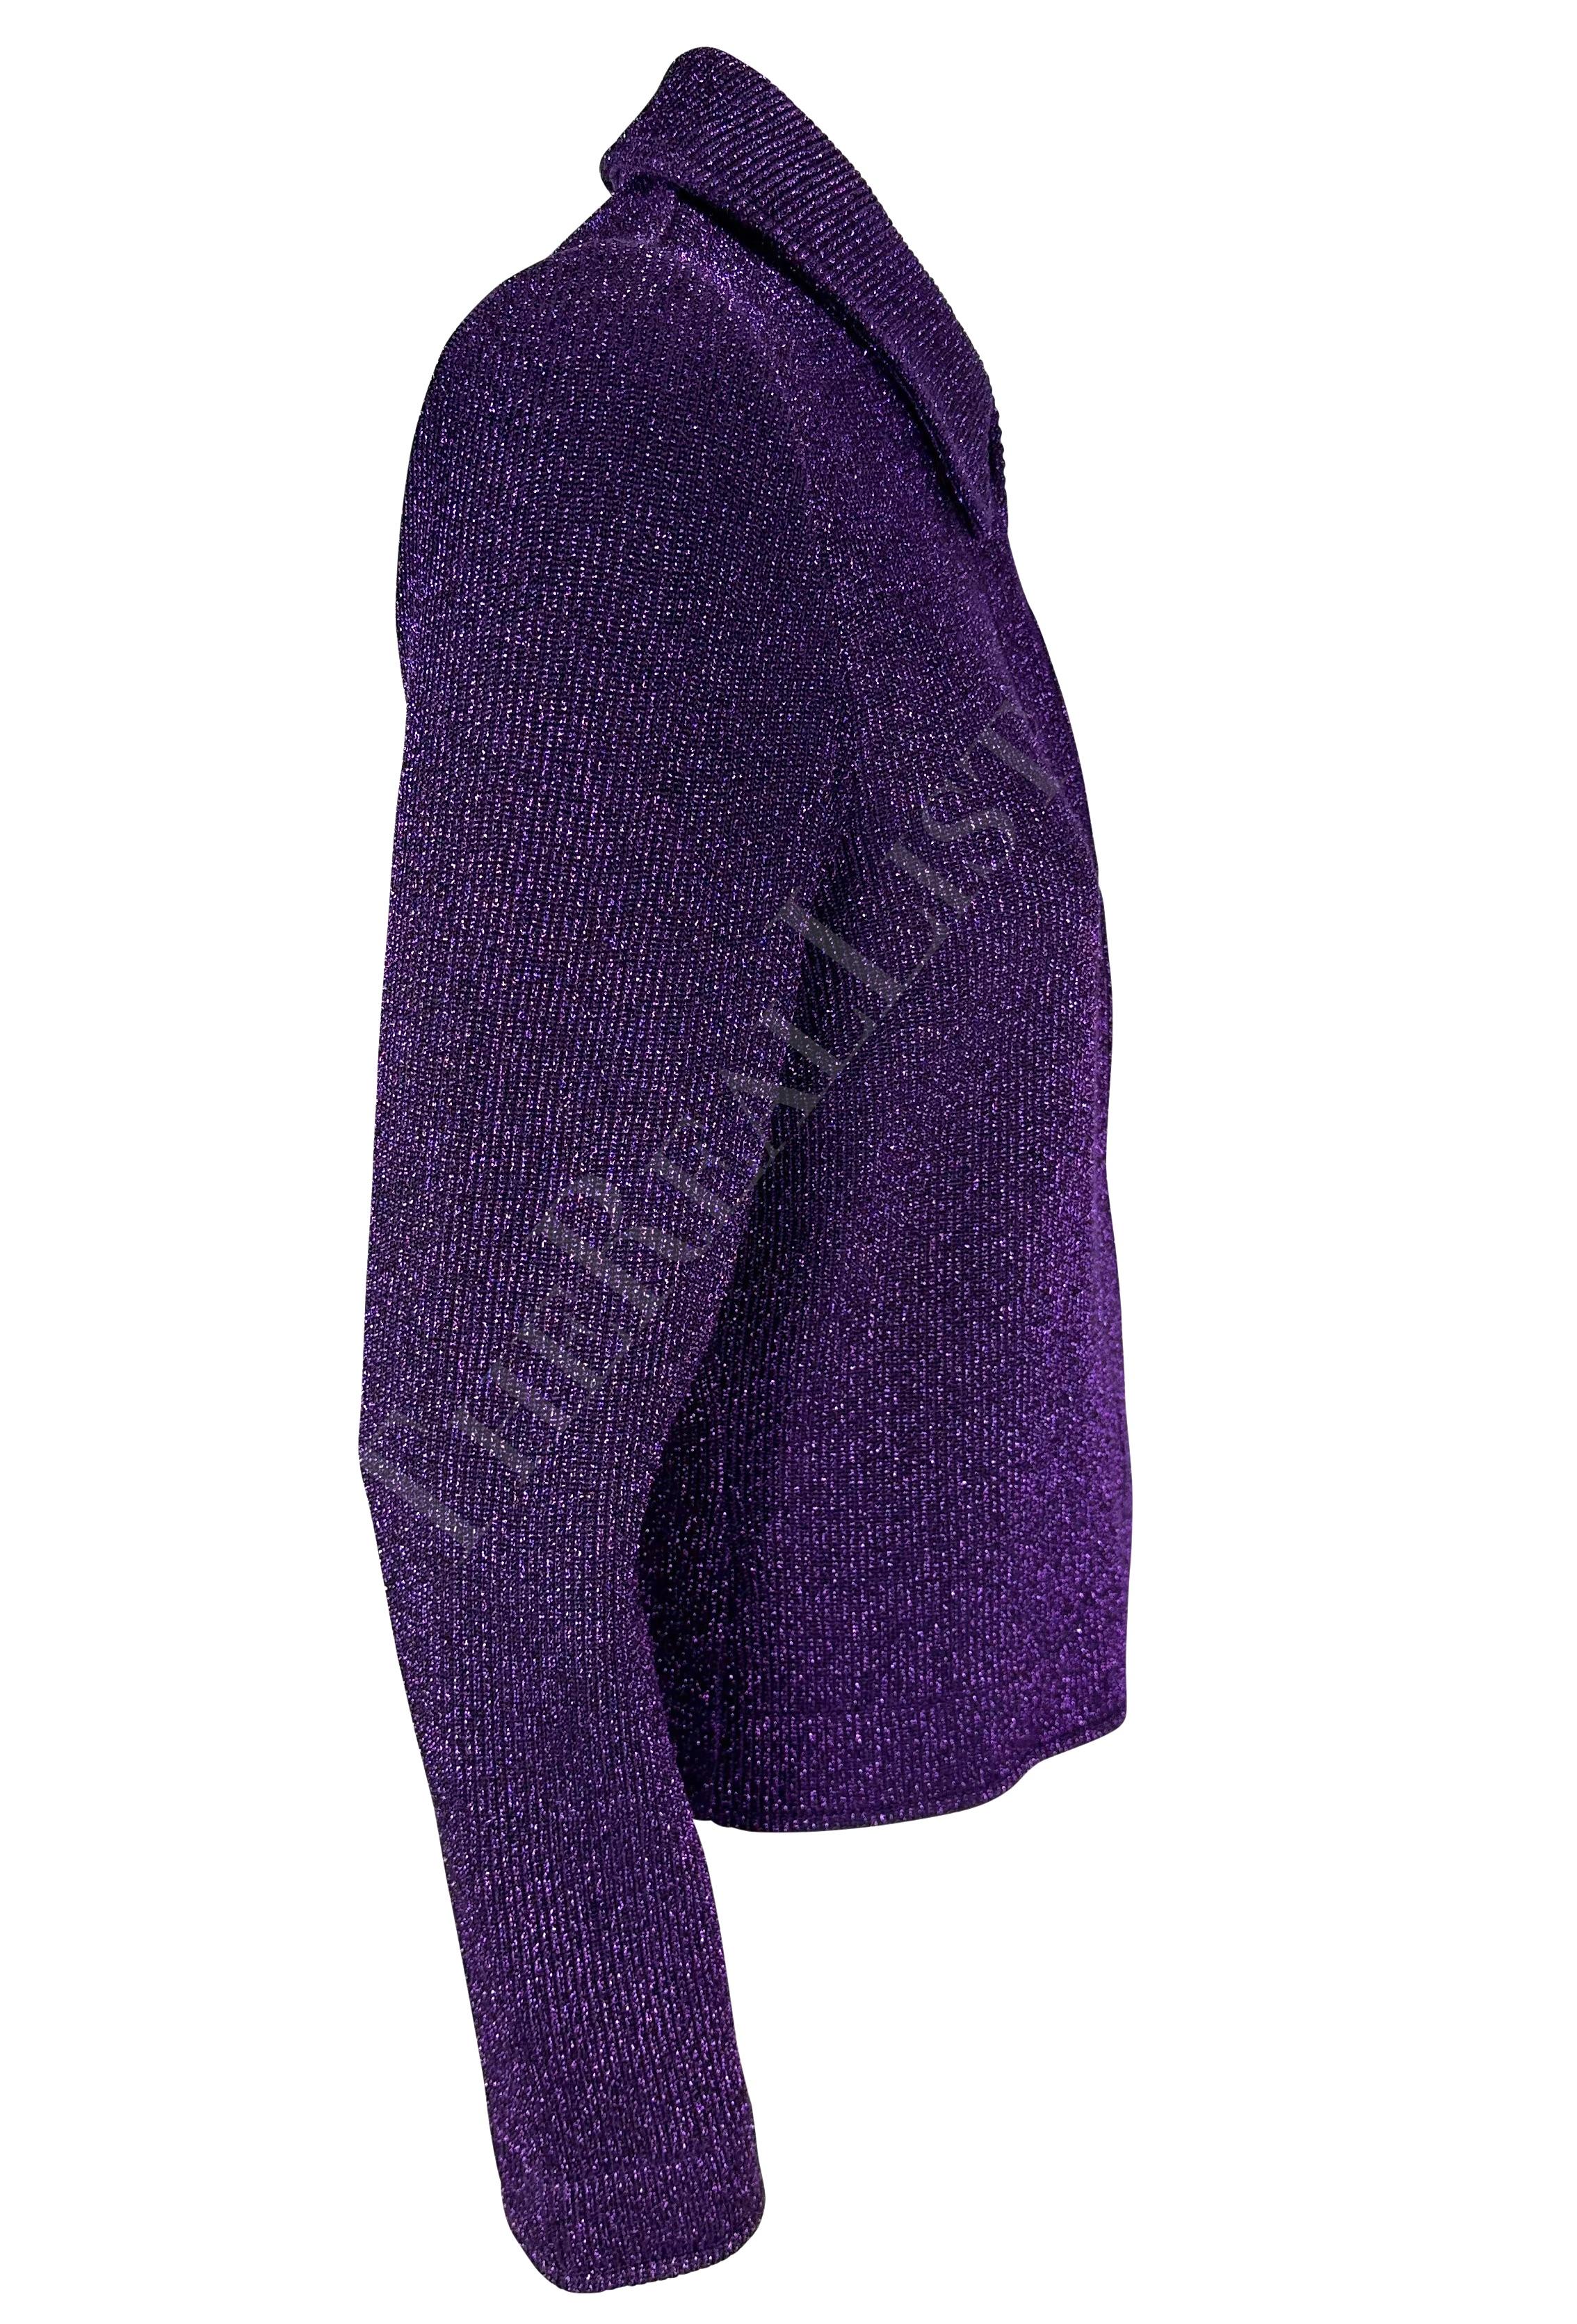 F/W 1996 Salvatore Ferragamo Runway Purple Metallic Knit Sweater Jacket For Sale 3